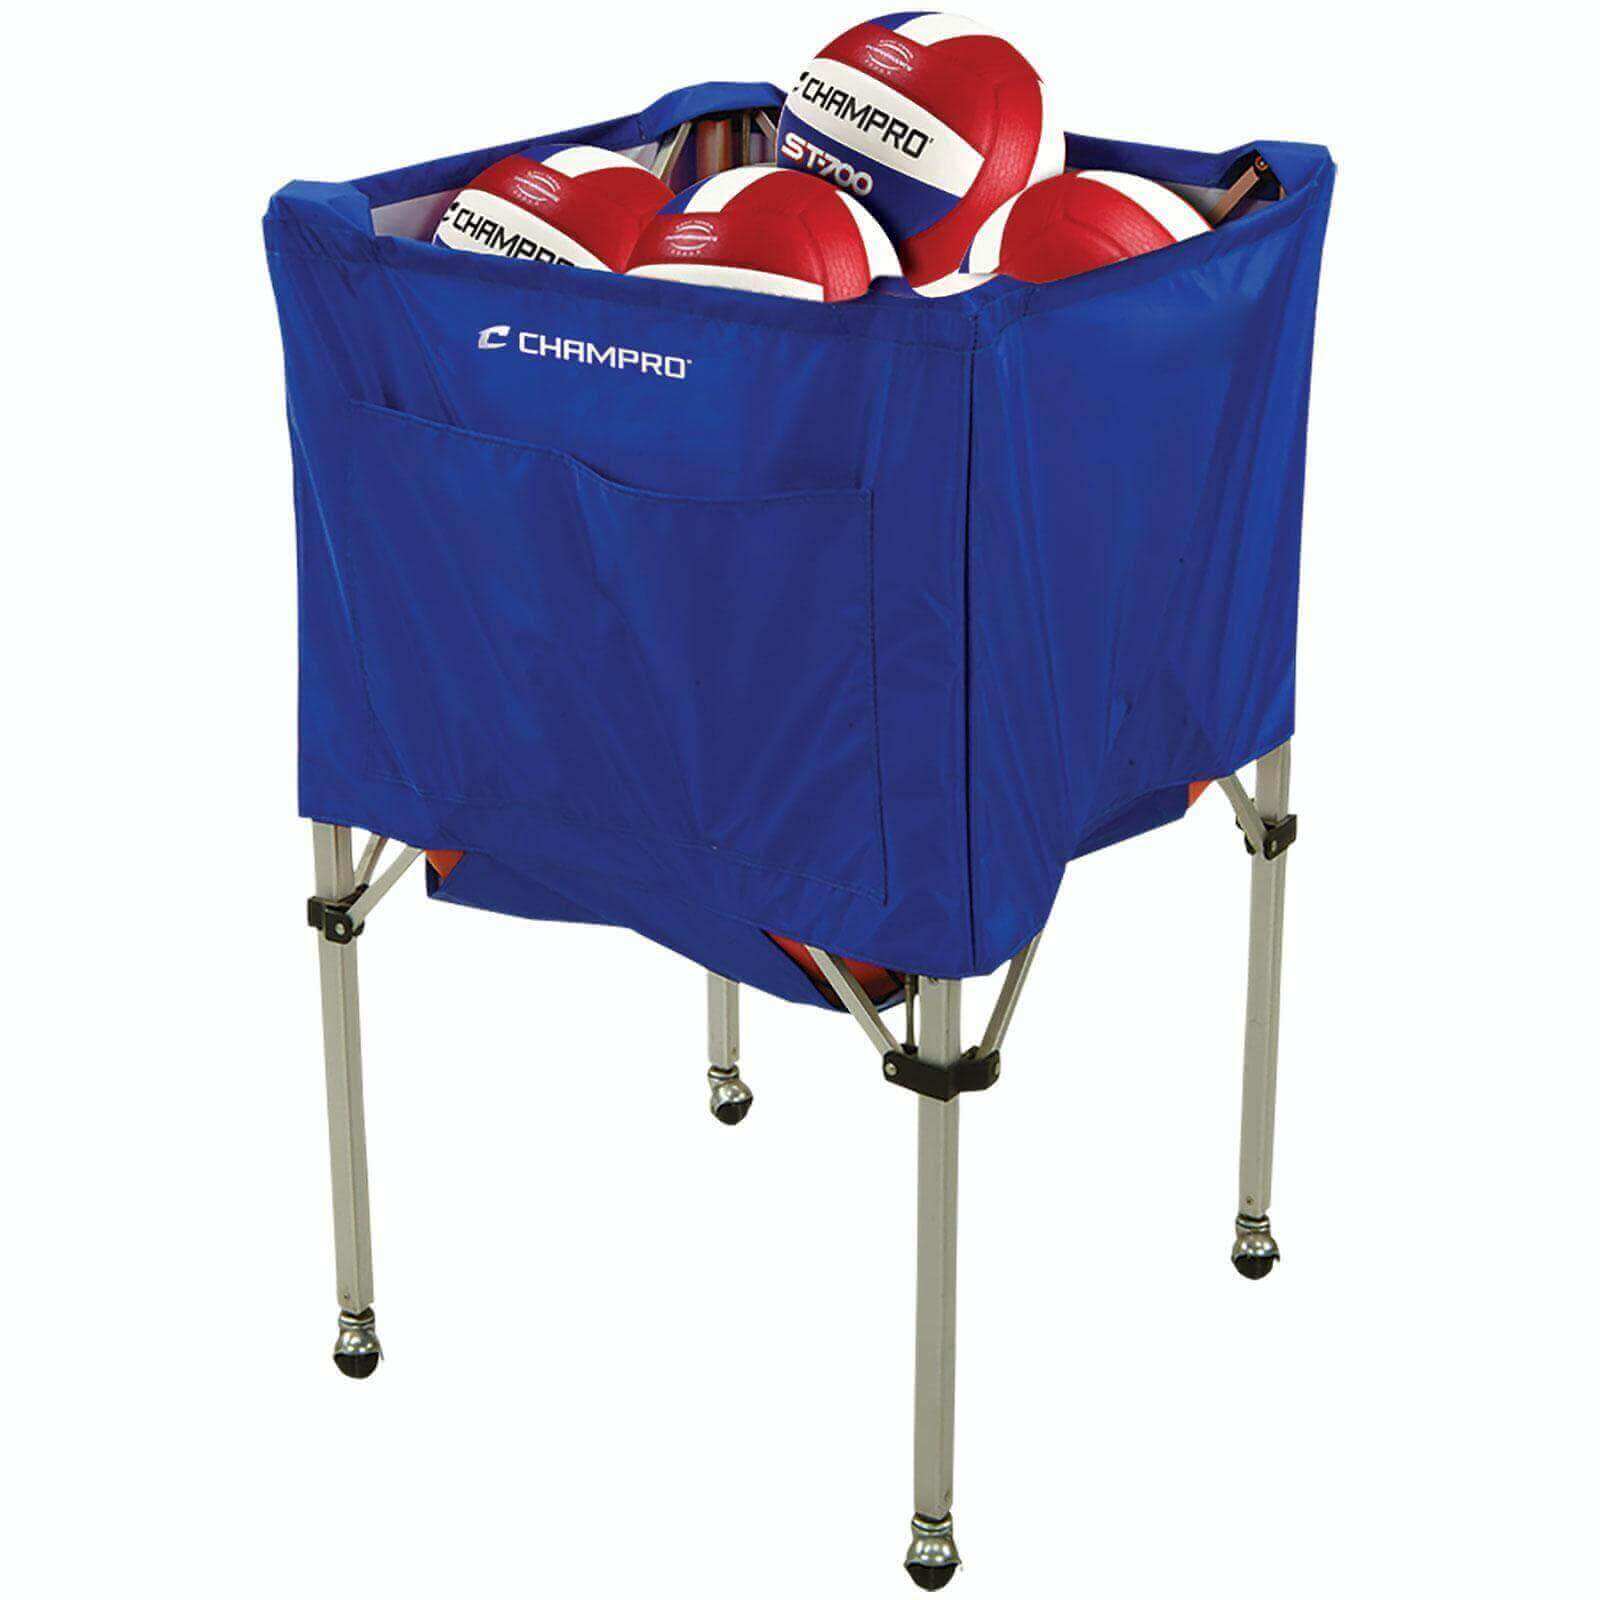 Champro Fold-Up Ball Cart